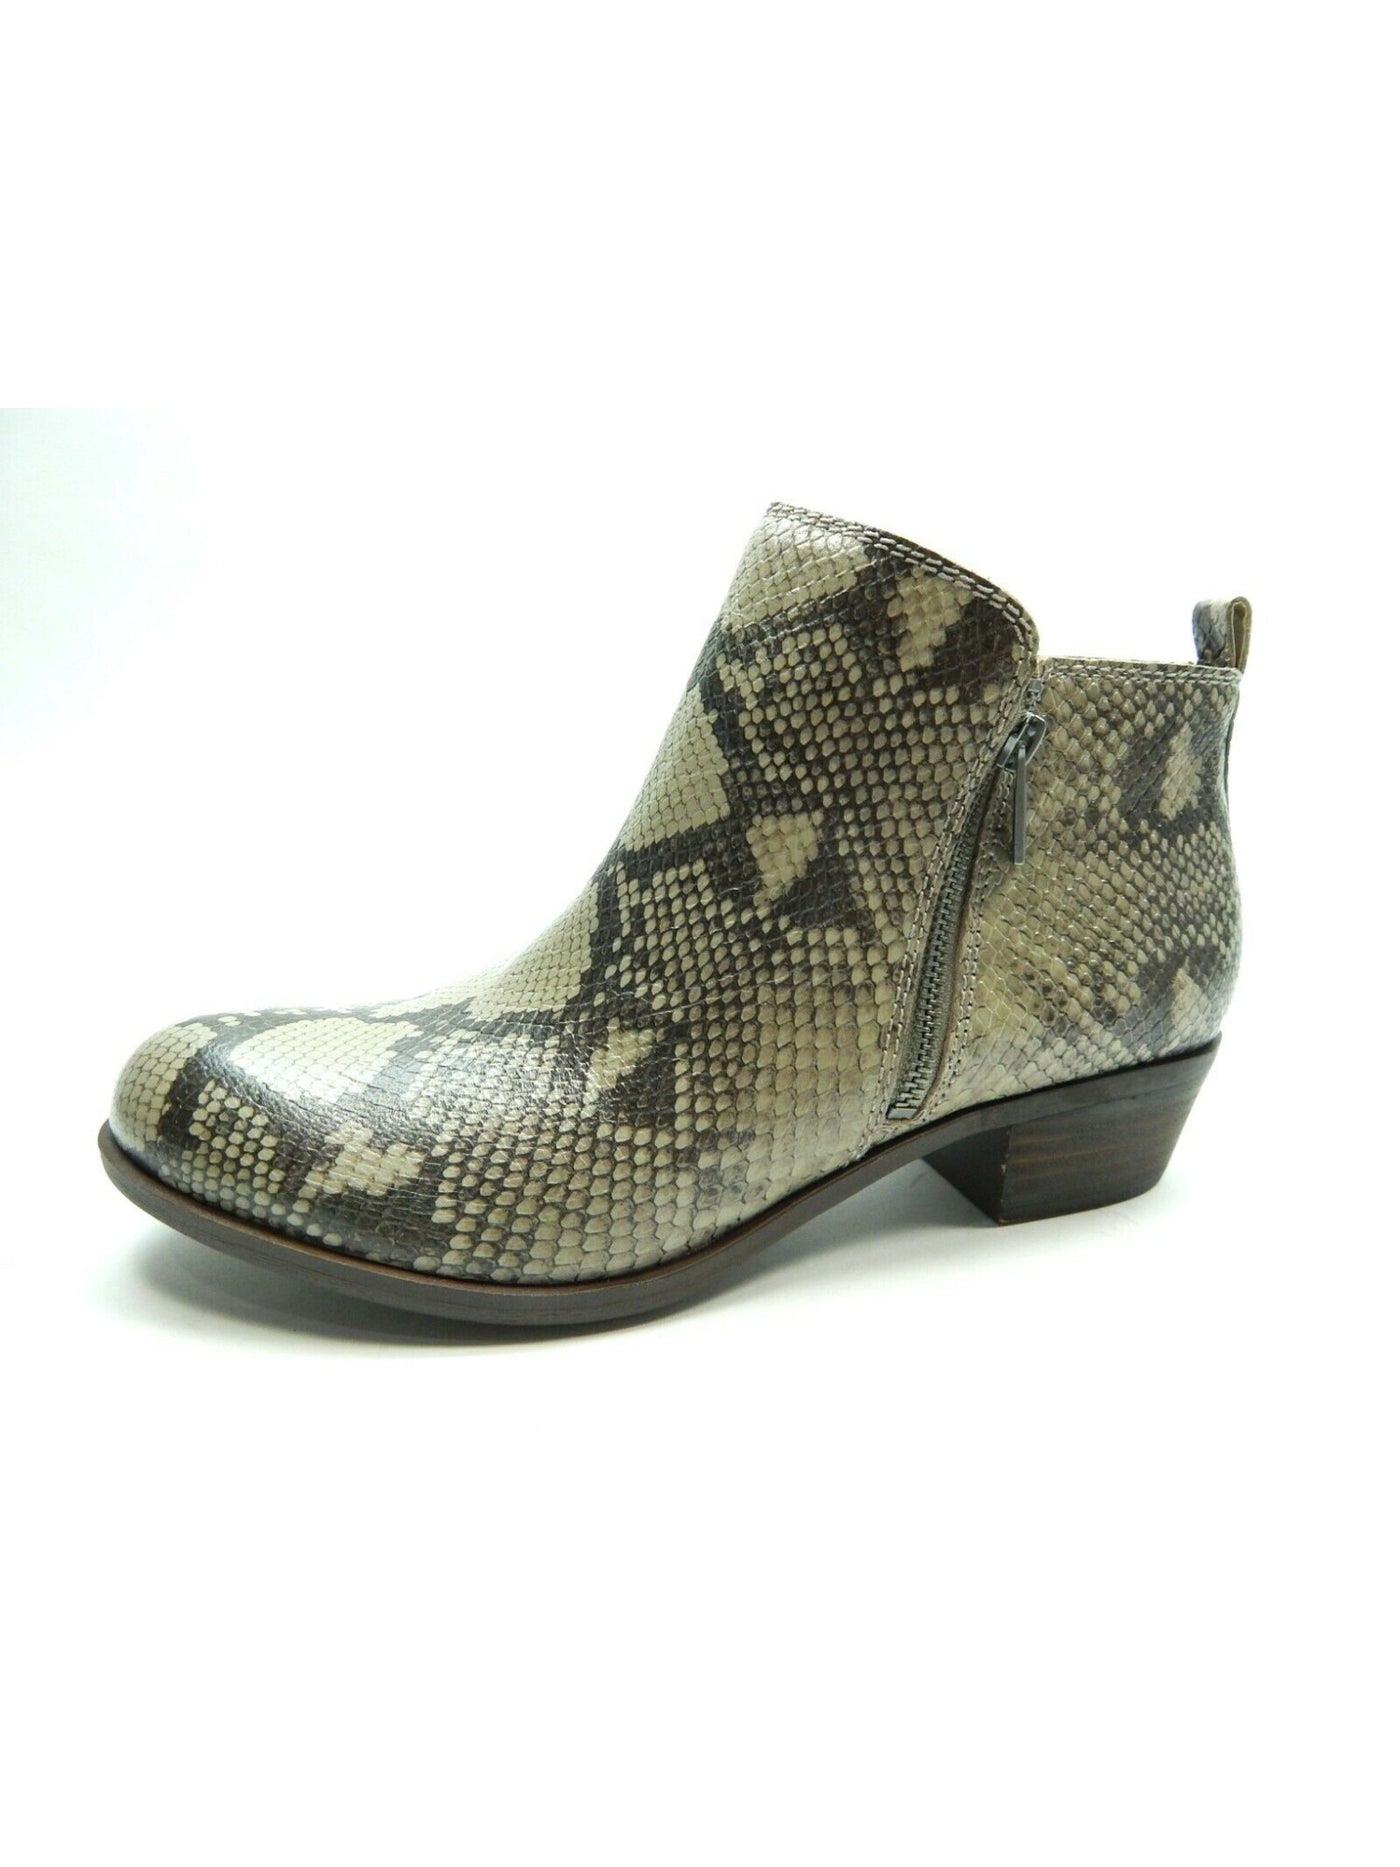 LUCKY BRAND Womens Gray Animal Print H2o Round Toe Stacked Heel Rain Boots 5